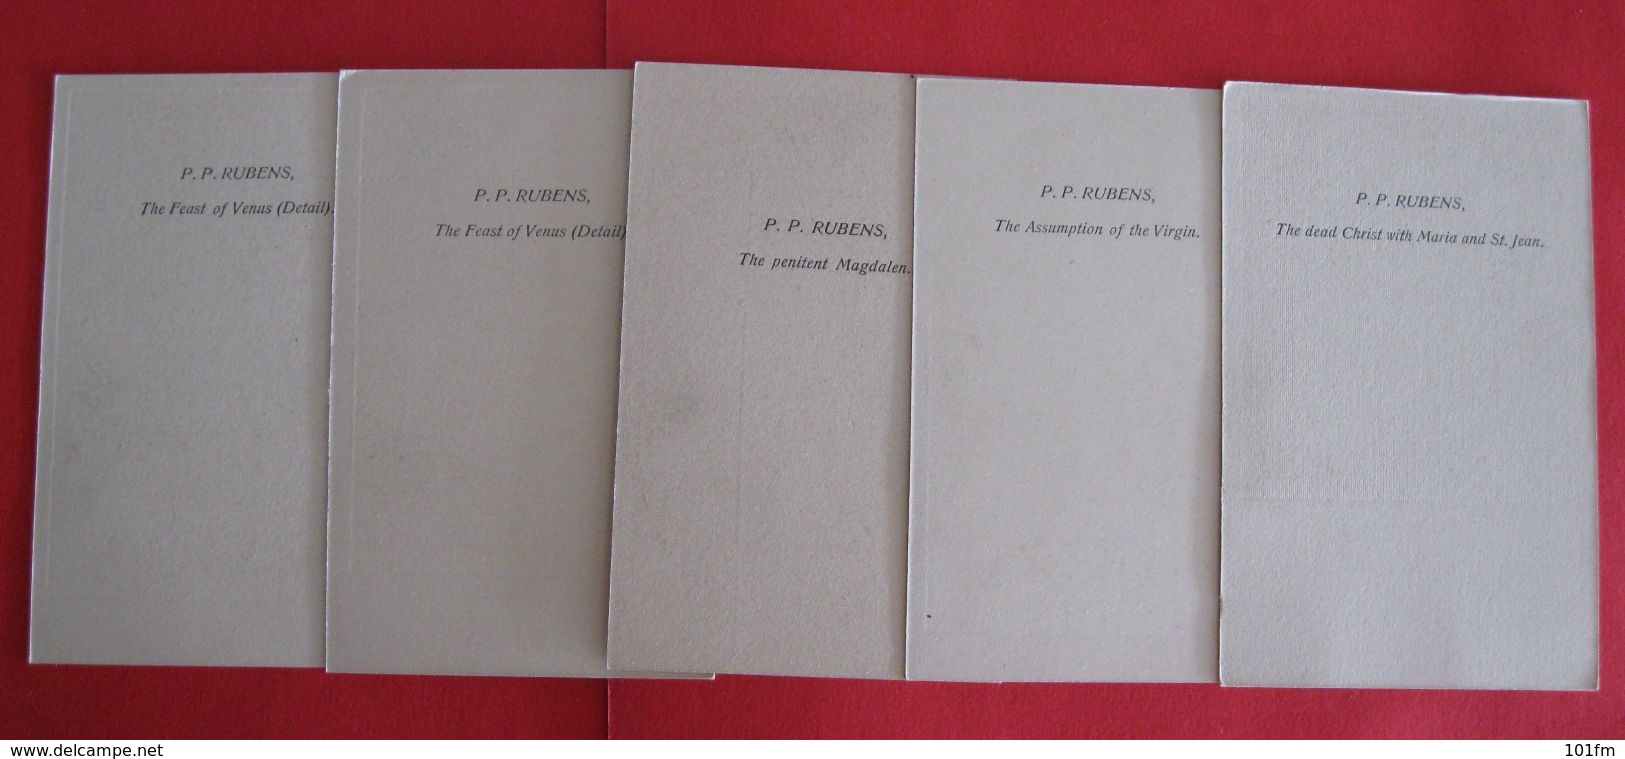 Peter Paul Rubens - Lot Of 15 Pictures In Original Envelope - 5 - 99 Postcards